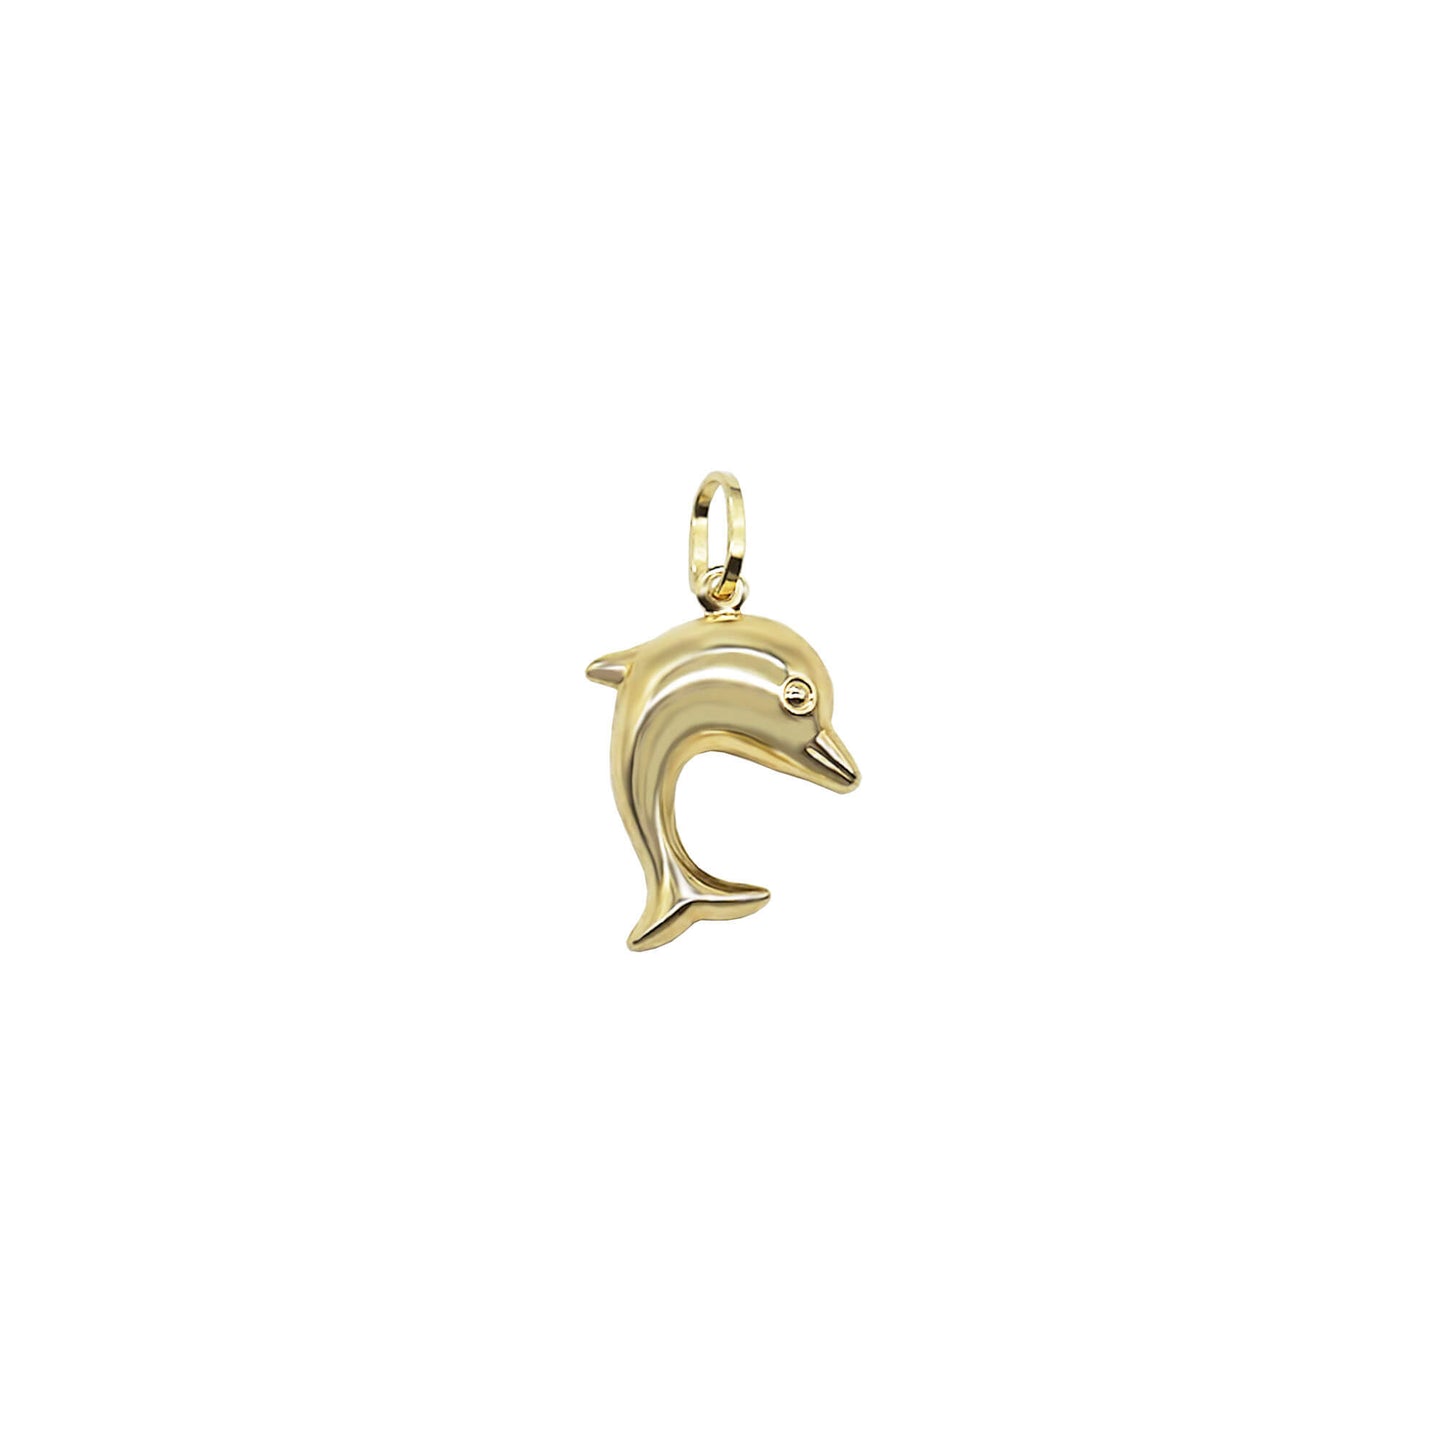 9k gold dolphin charm